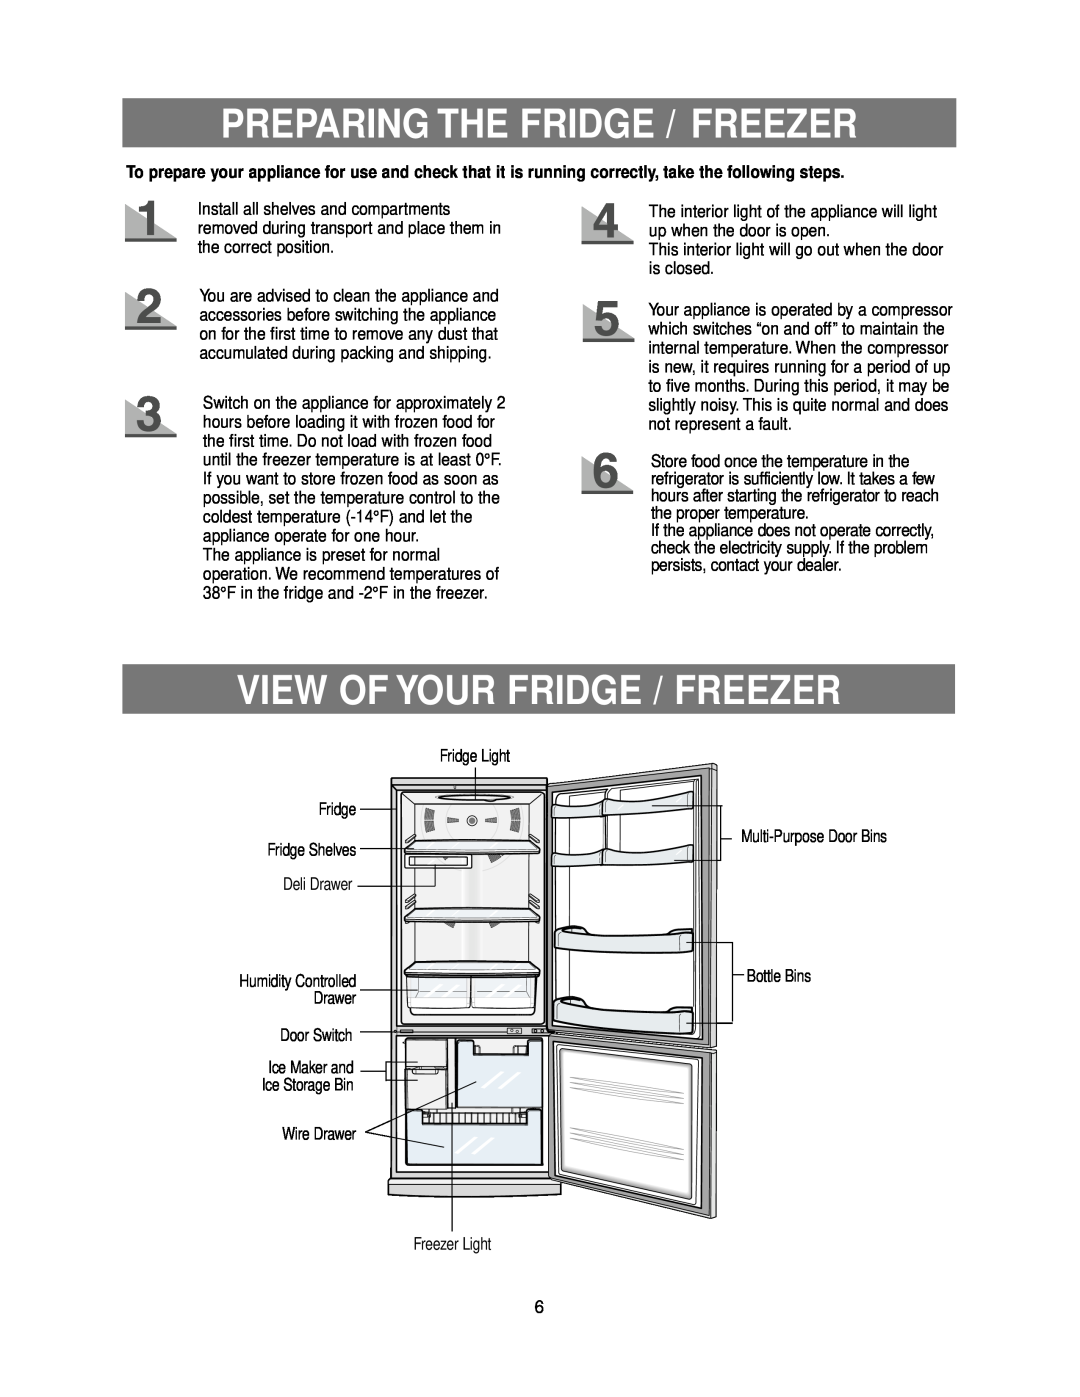 Samsung RB215LABP Preparing The Fridge / Freezer, View Of Your Fridge / Freezer, Multi-Purpose Door Bins Bottle Bins 